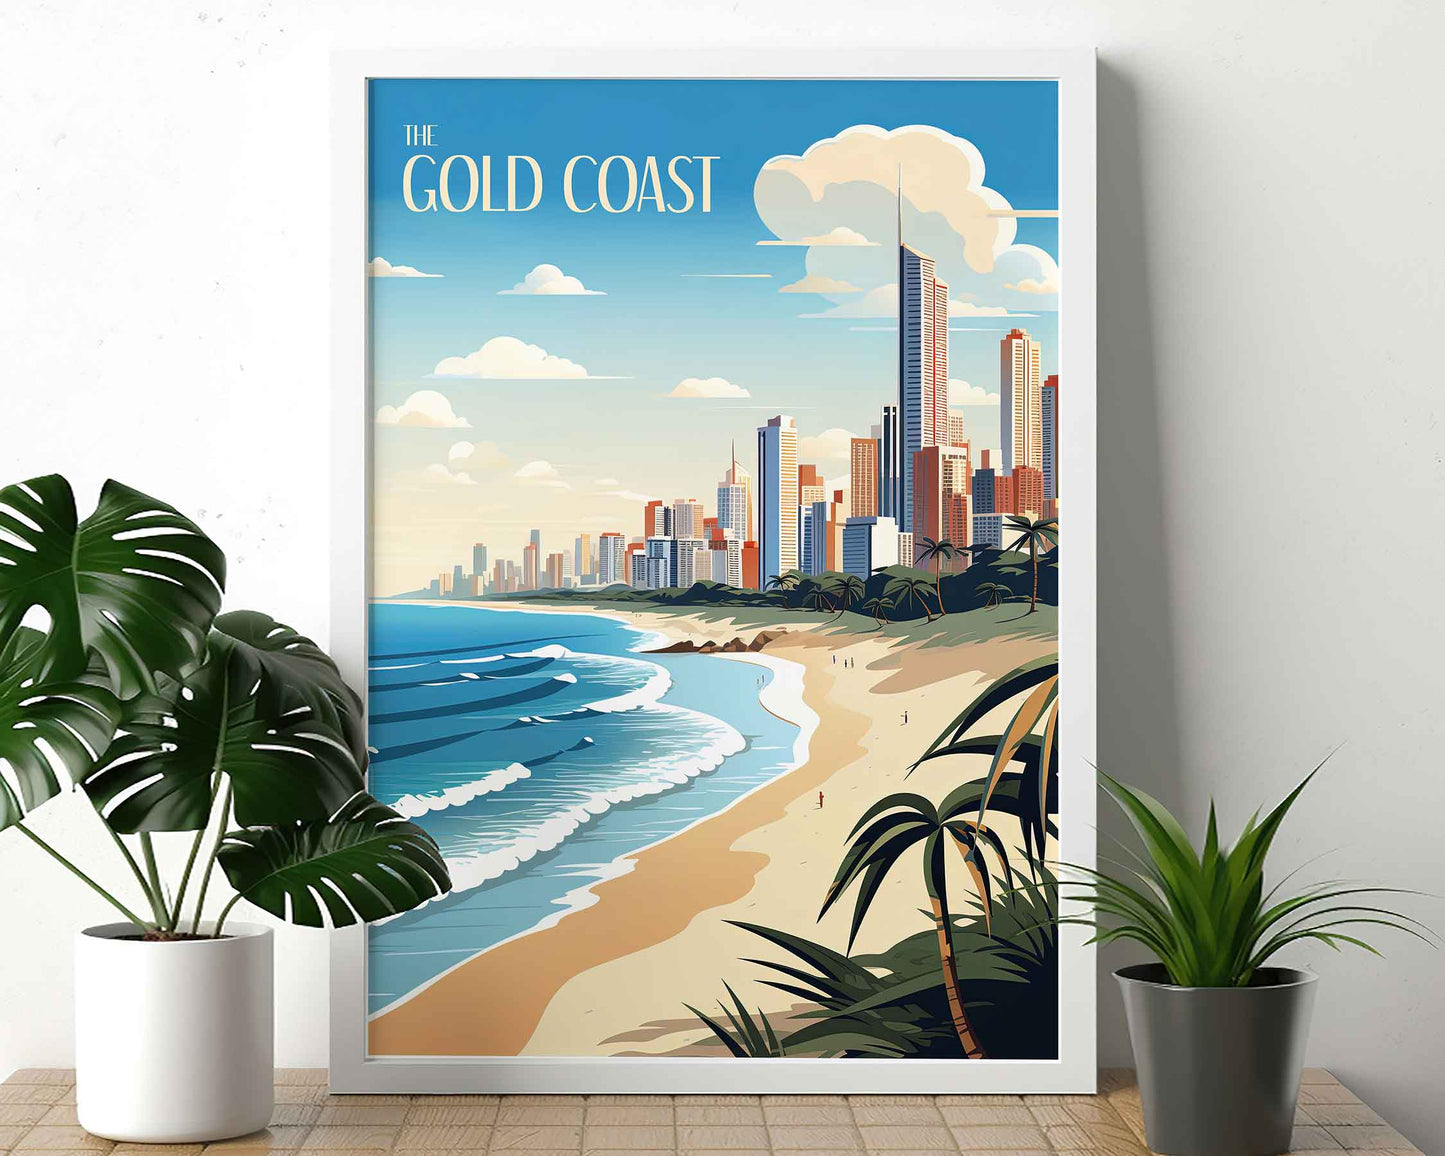 Framed Image of Gold Coast Australia Wall Art Print Travel Posters Illustration